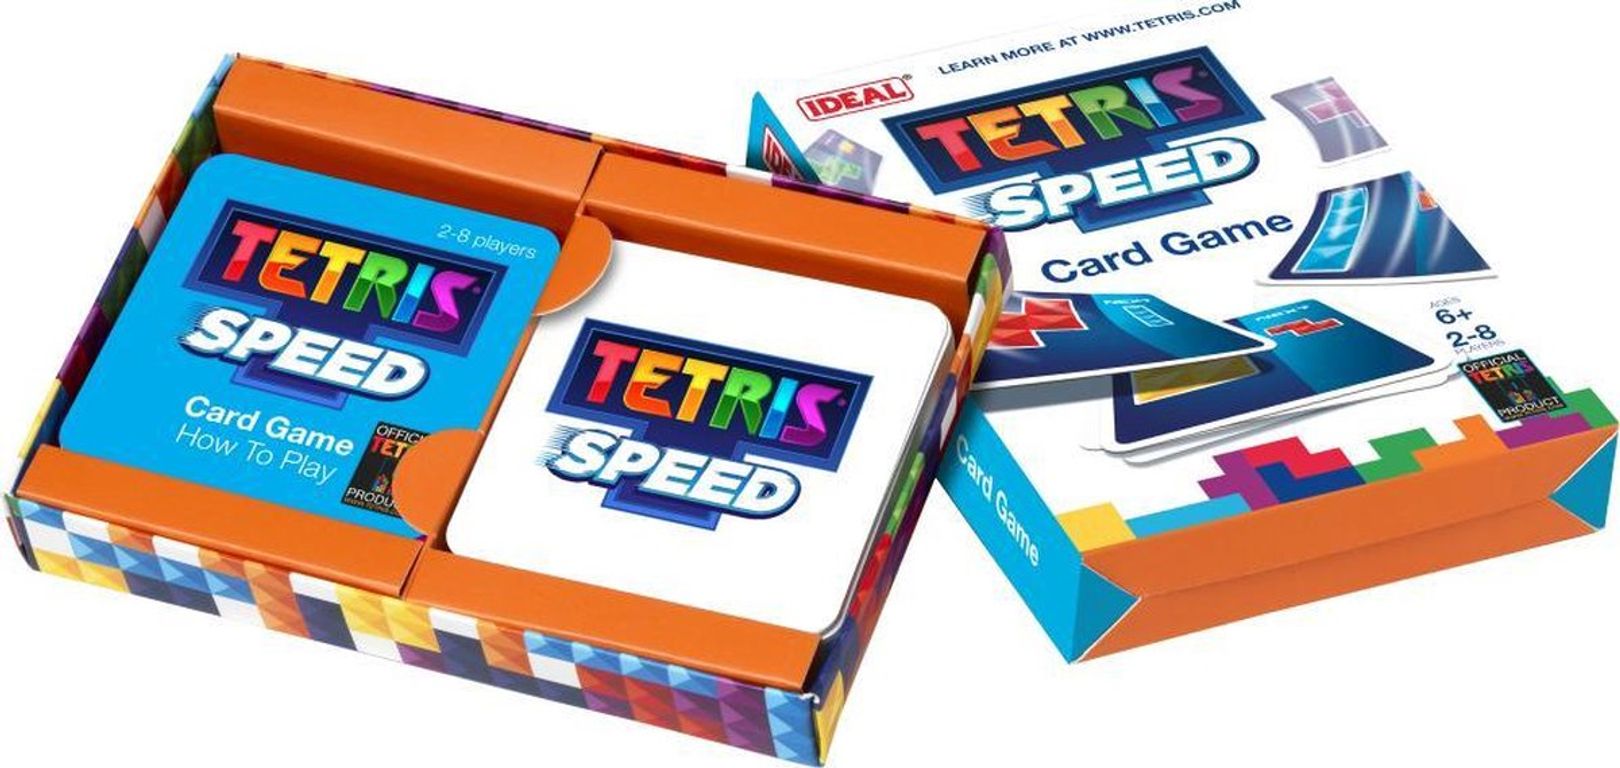 Tetris Speed components